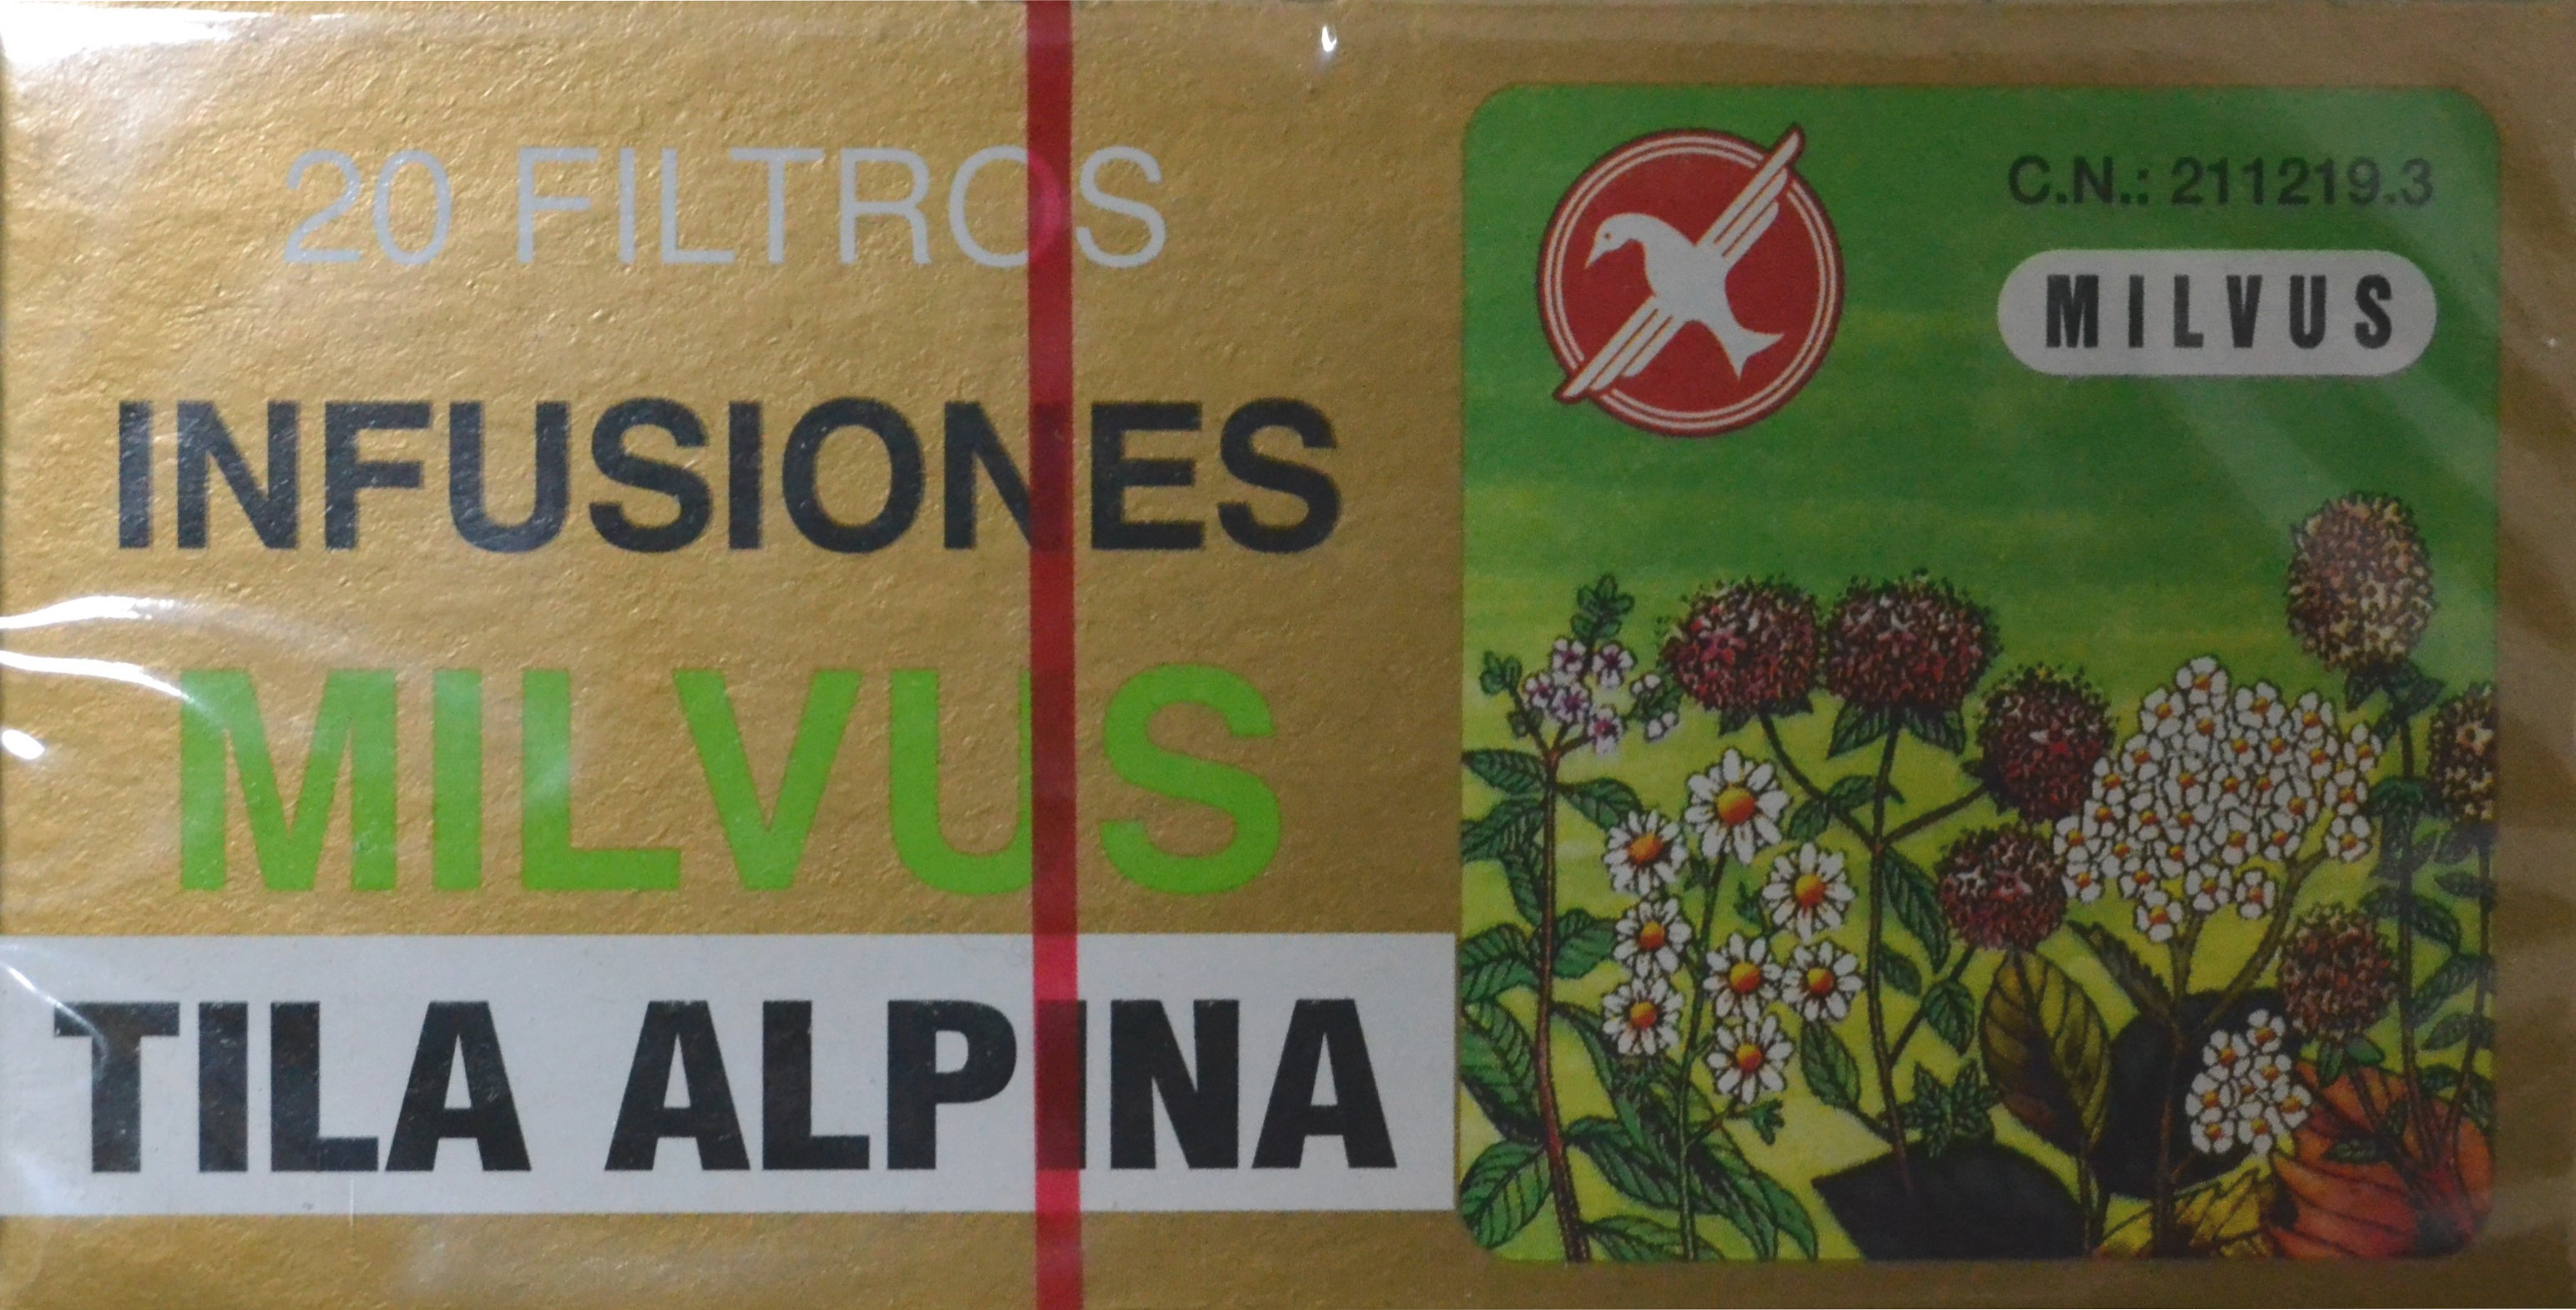 TILA ALPINA 20 FILTROS 1,2 g - Farmacia Angulo Arce